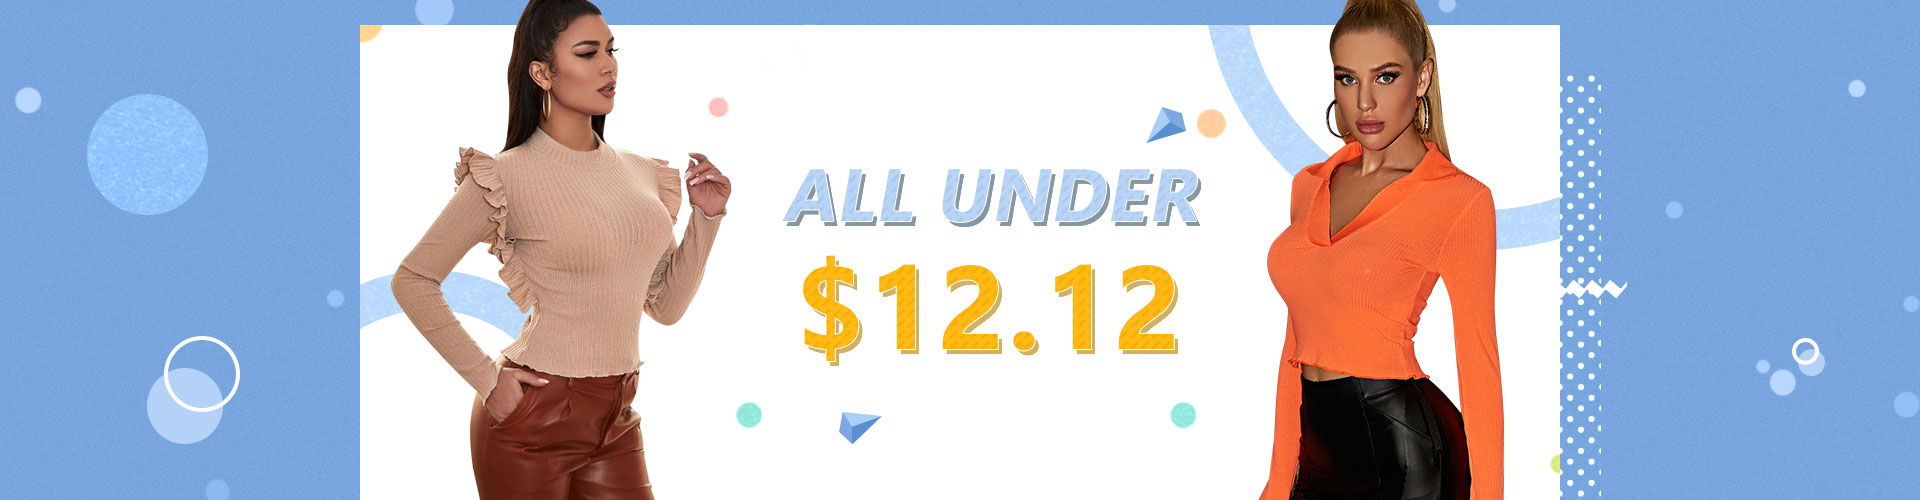 All under $12.12